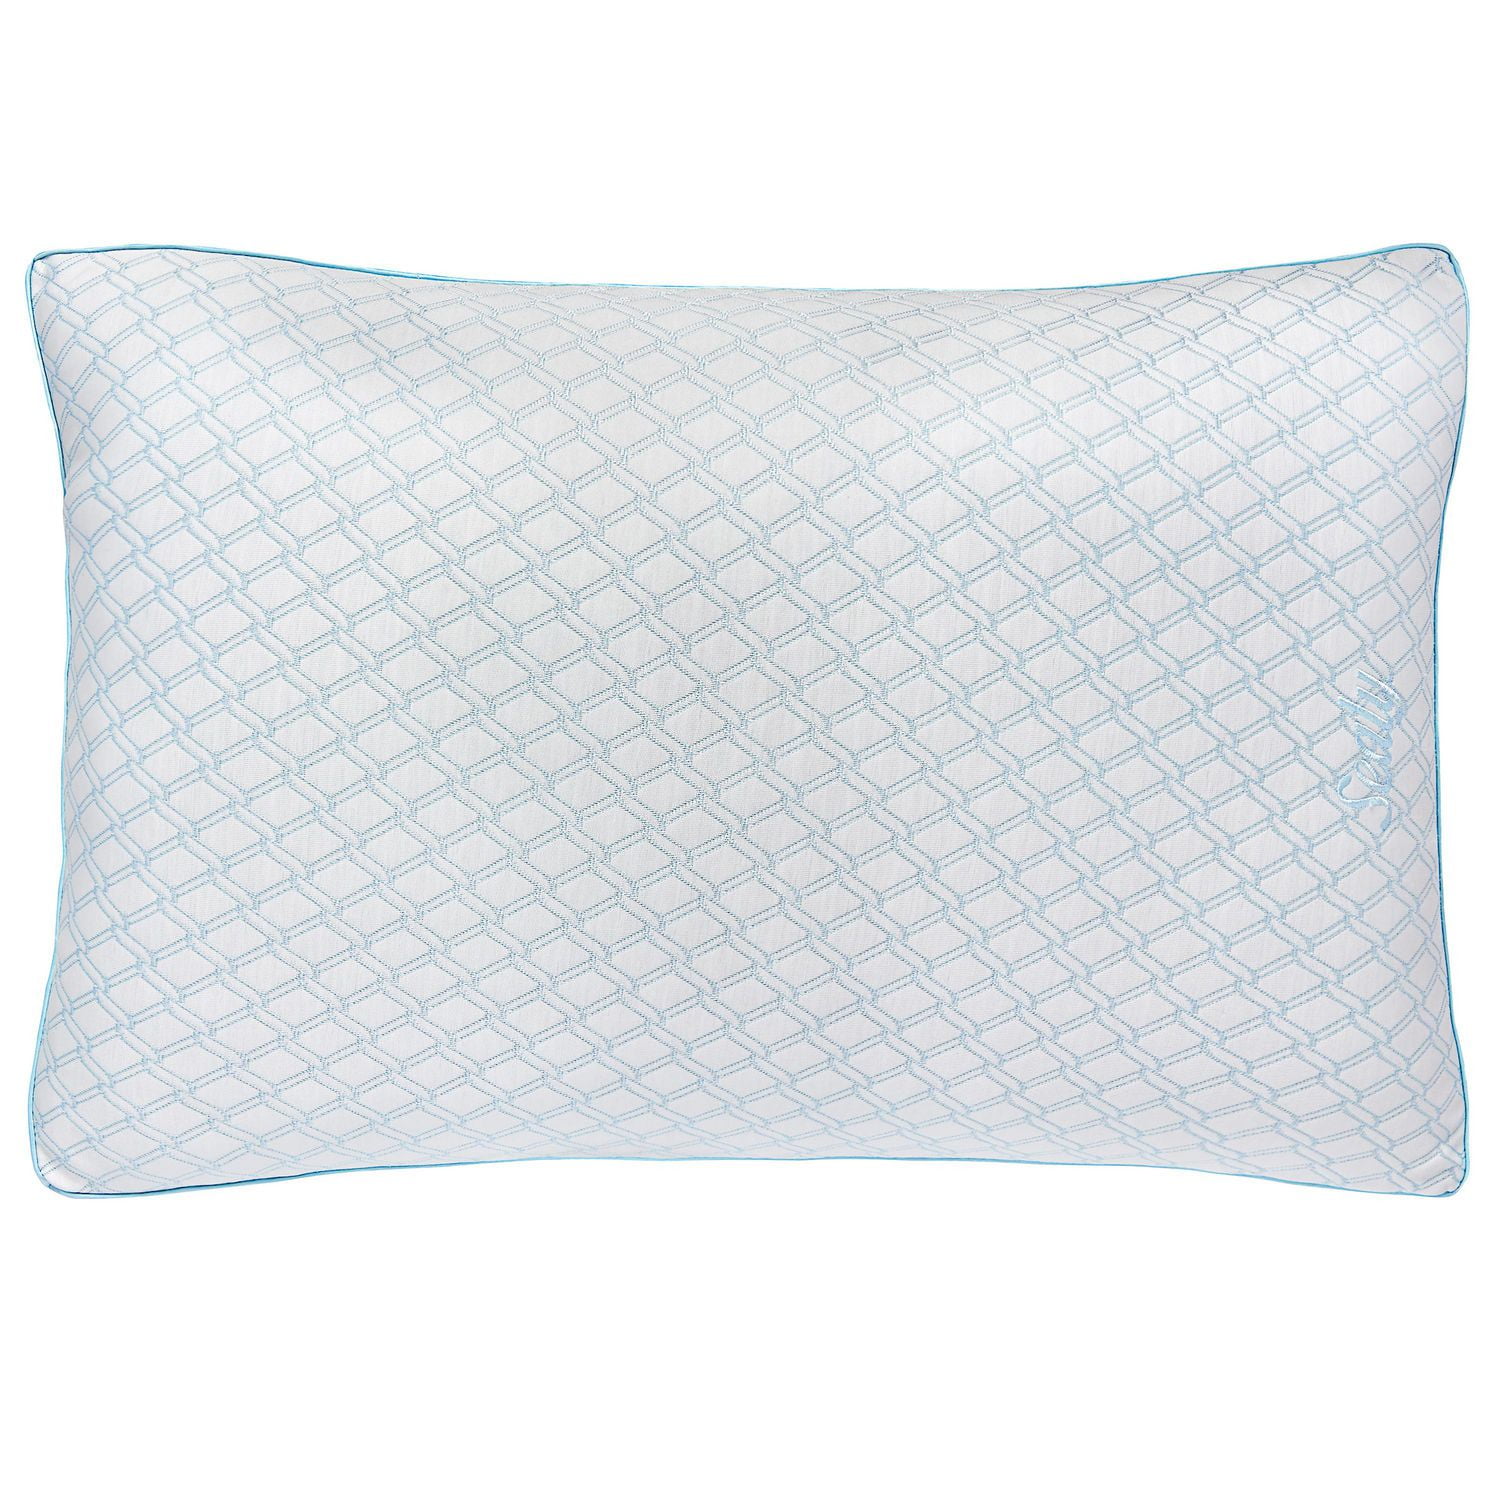 Serta Polar Breeze Memory Foam Gel Fibre Pillow with Pillow Cover,  Standard/Queen, 20-in x 28-in